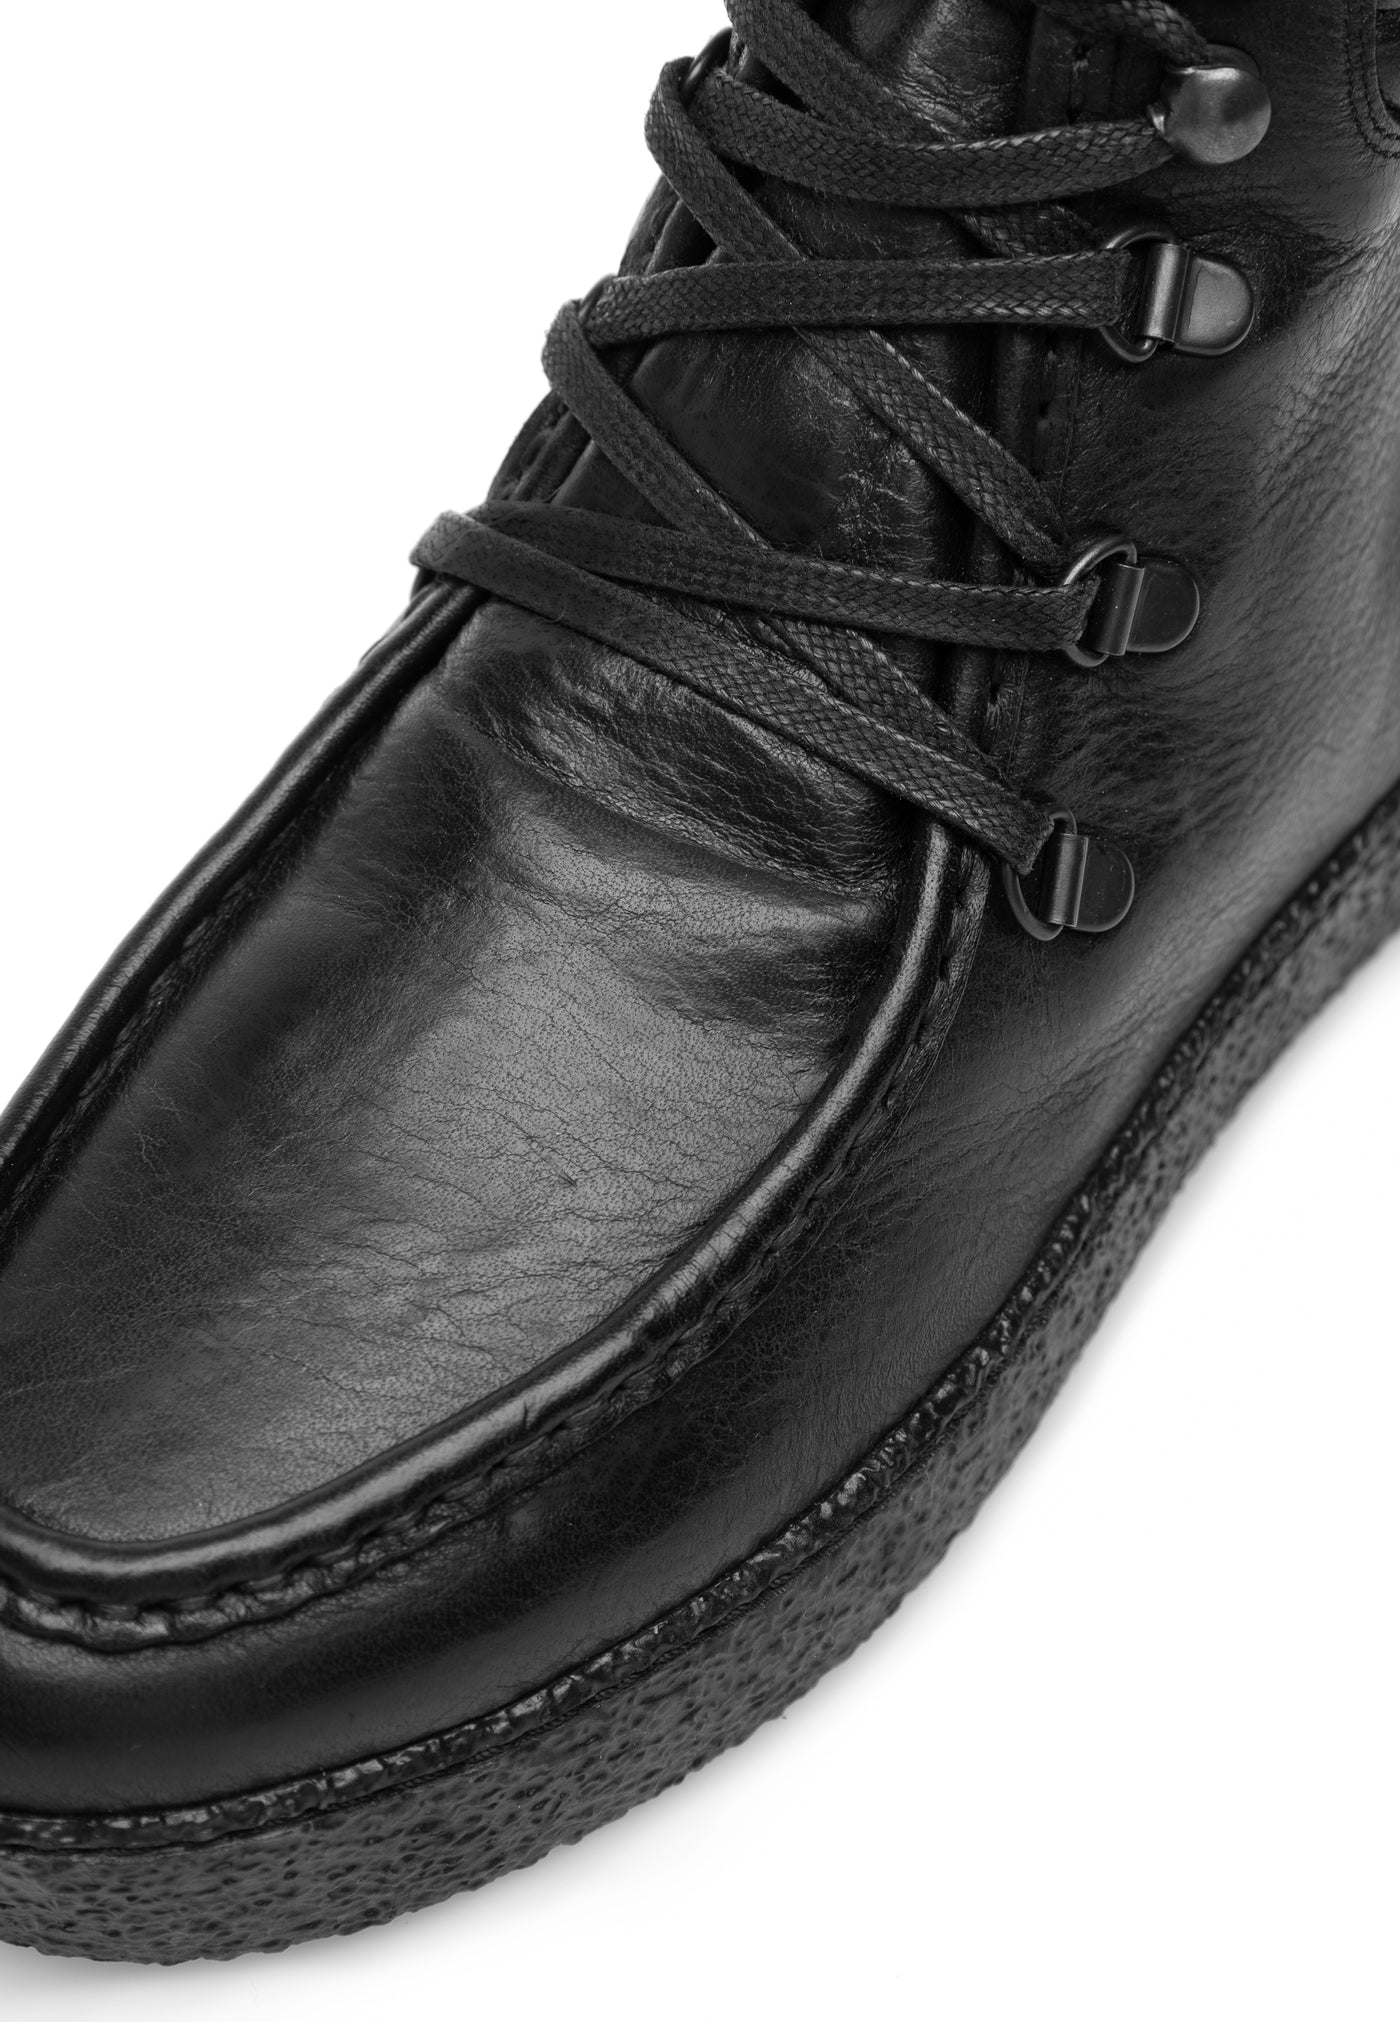 CASHOTT CASCAMILLA Lace Moc Boot Leather Ankle Boots Black